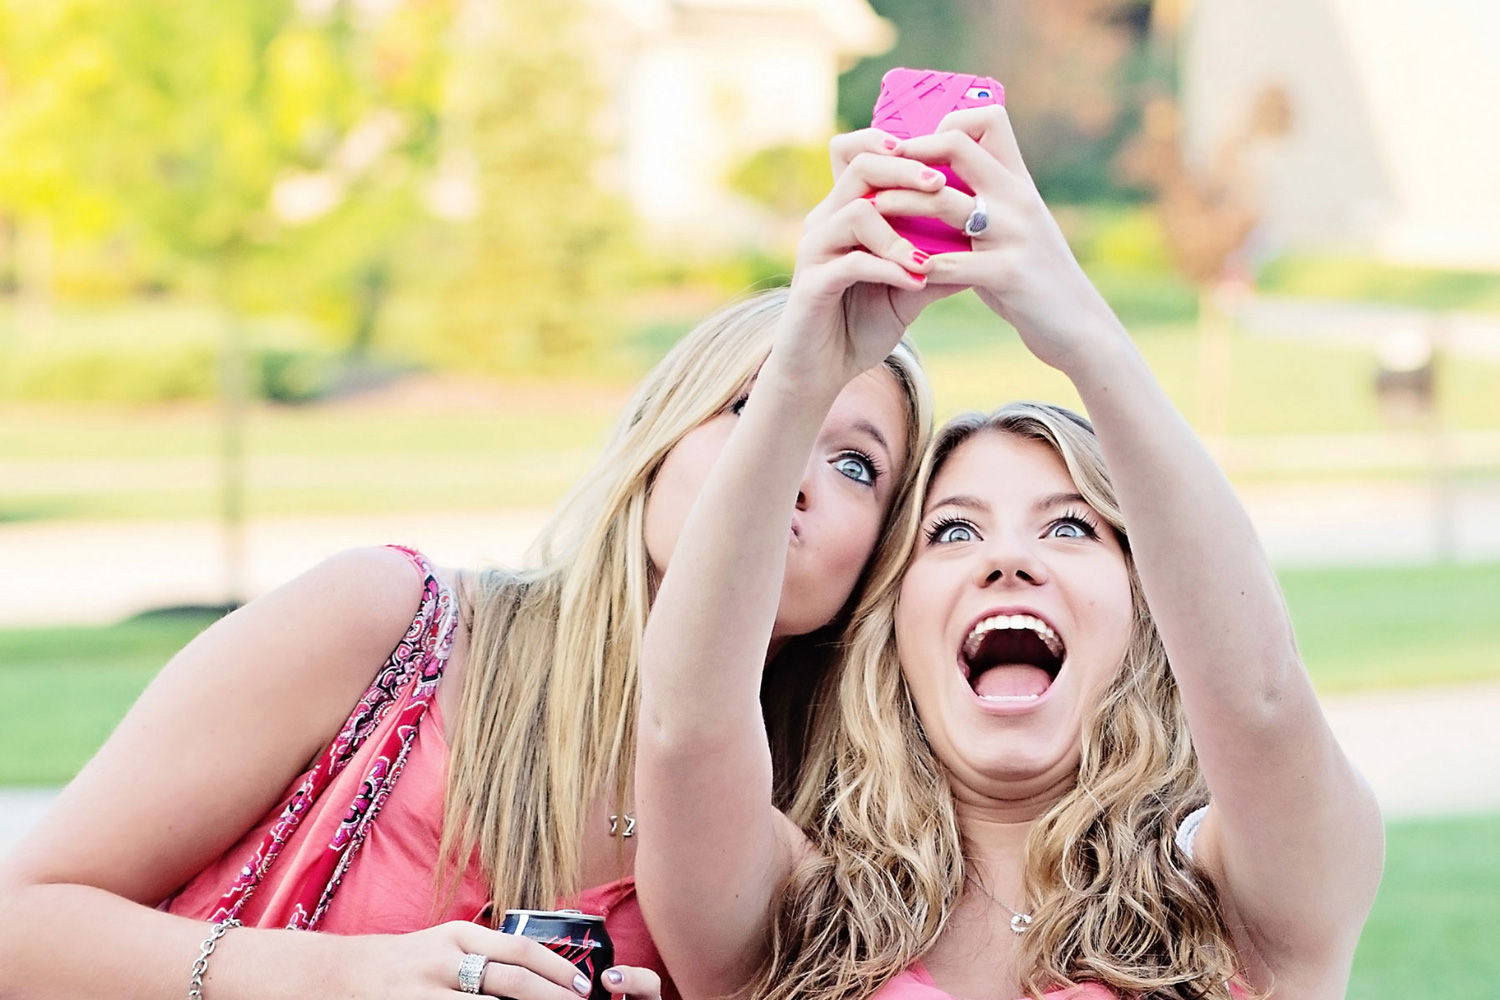 snapchat seven billion video views women selfies user customers consumers marketing